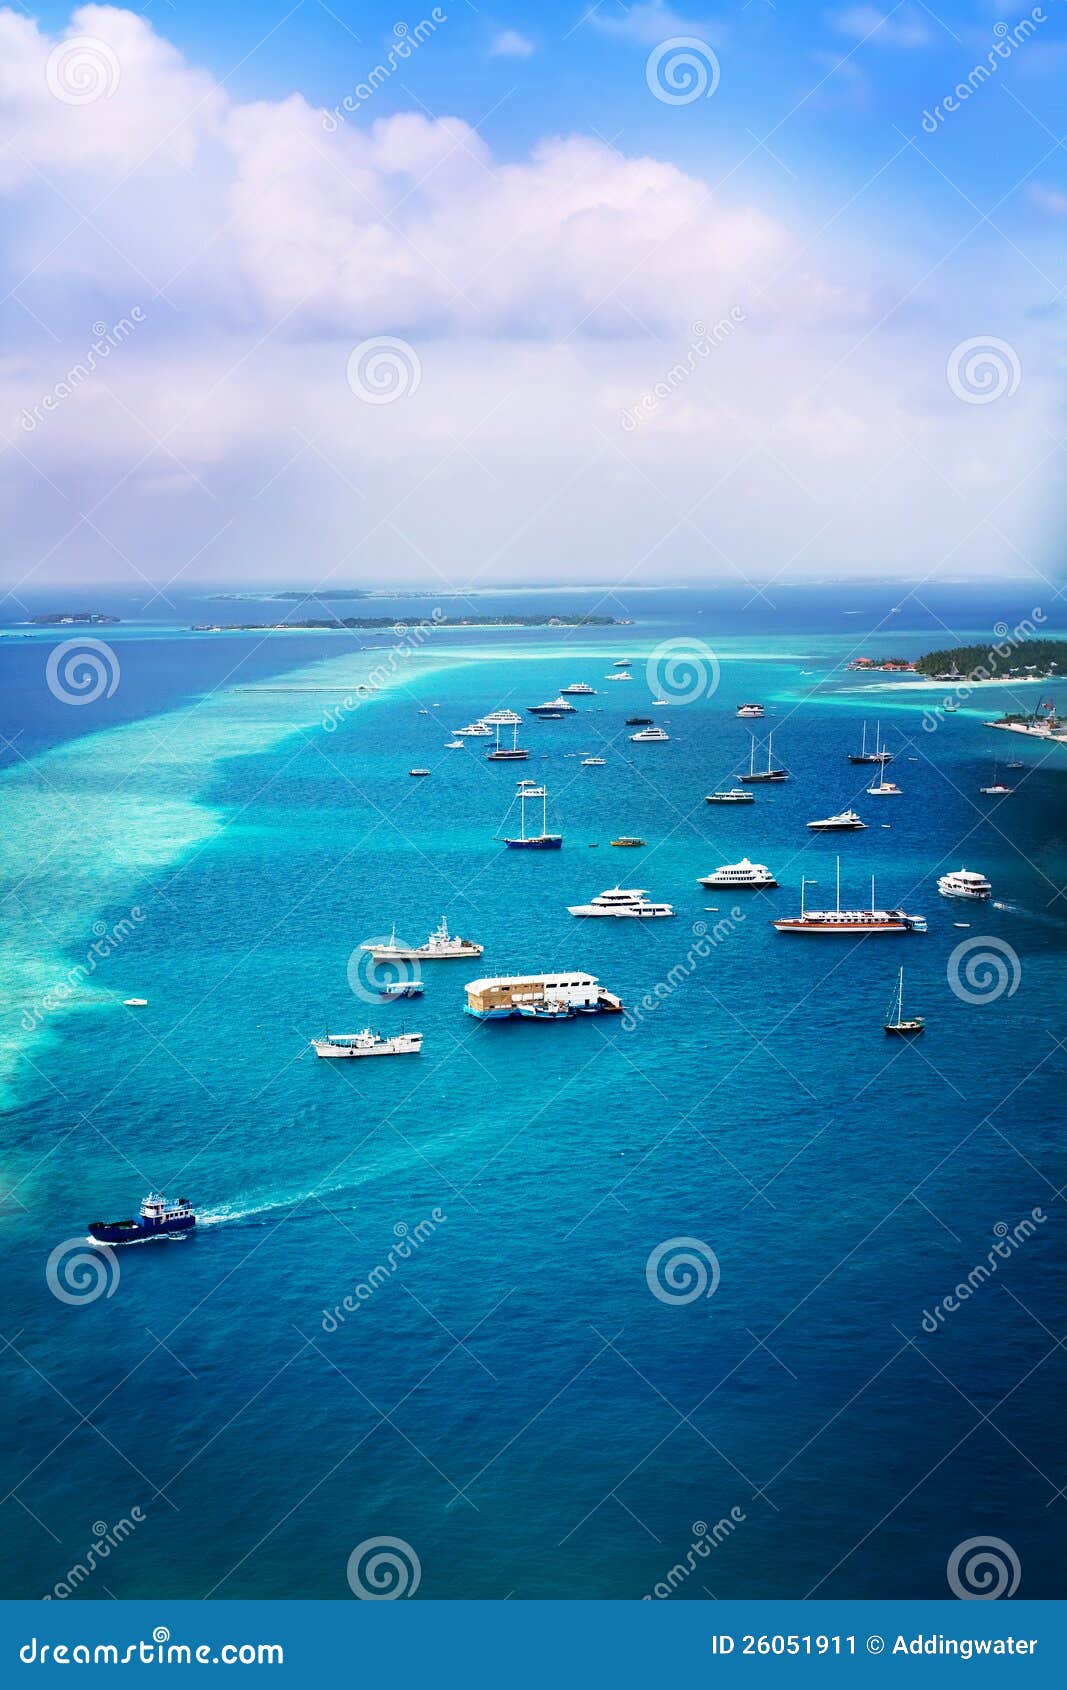 Ships In Ocean Near Beach In Maldive Island Stock Image - Image: 26051911